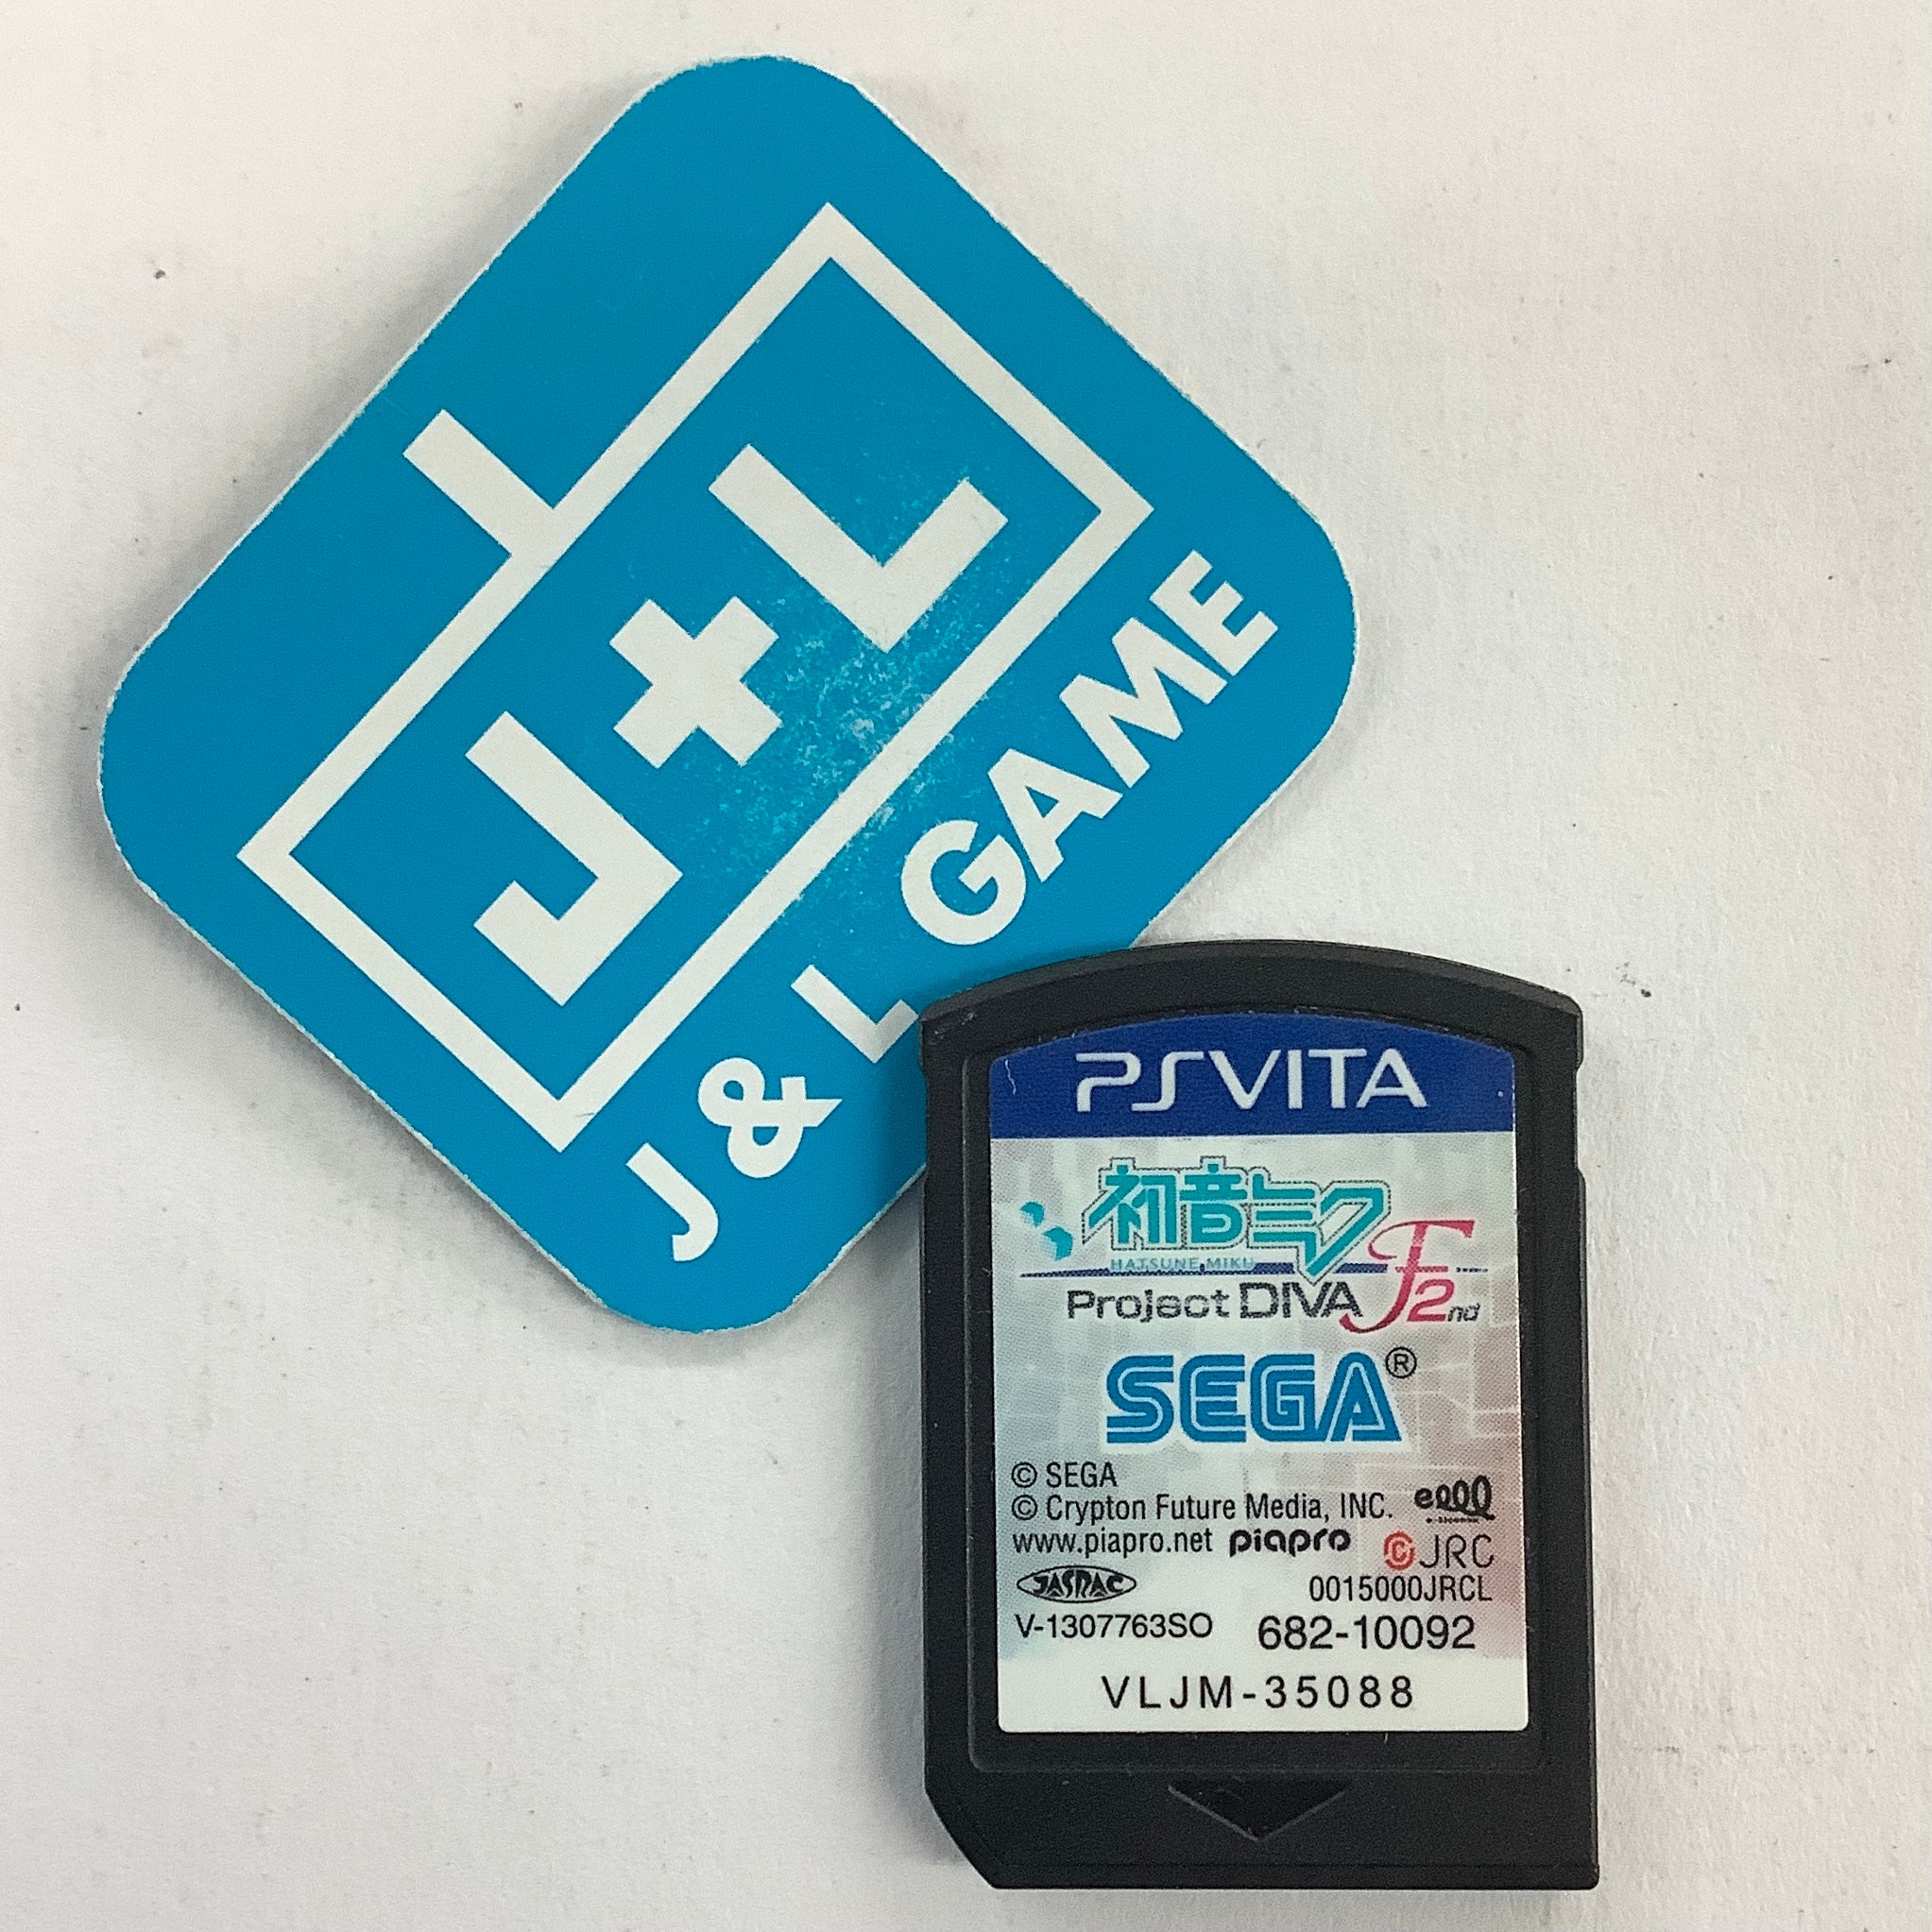 Hatsune Miku Project DIVA-F 2nd - (PSV) PlayStation Vita [Pre-Owned] (Japanese Import) Video Games SEGA   